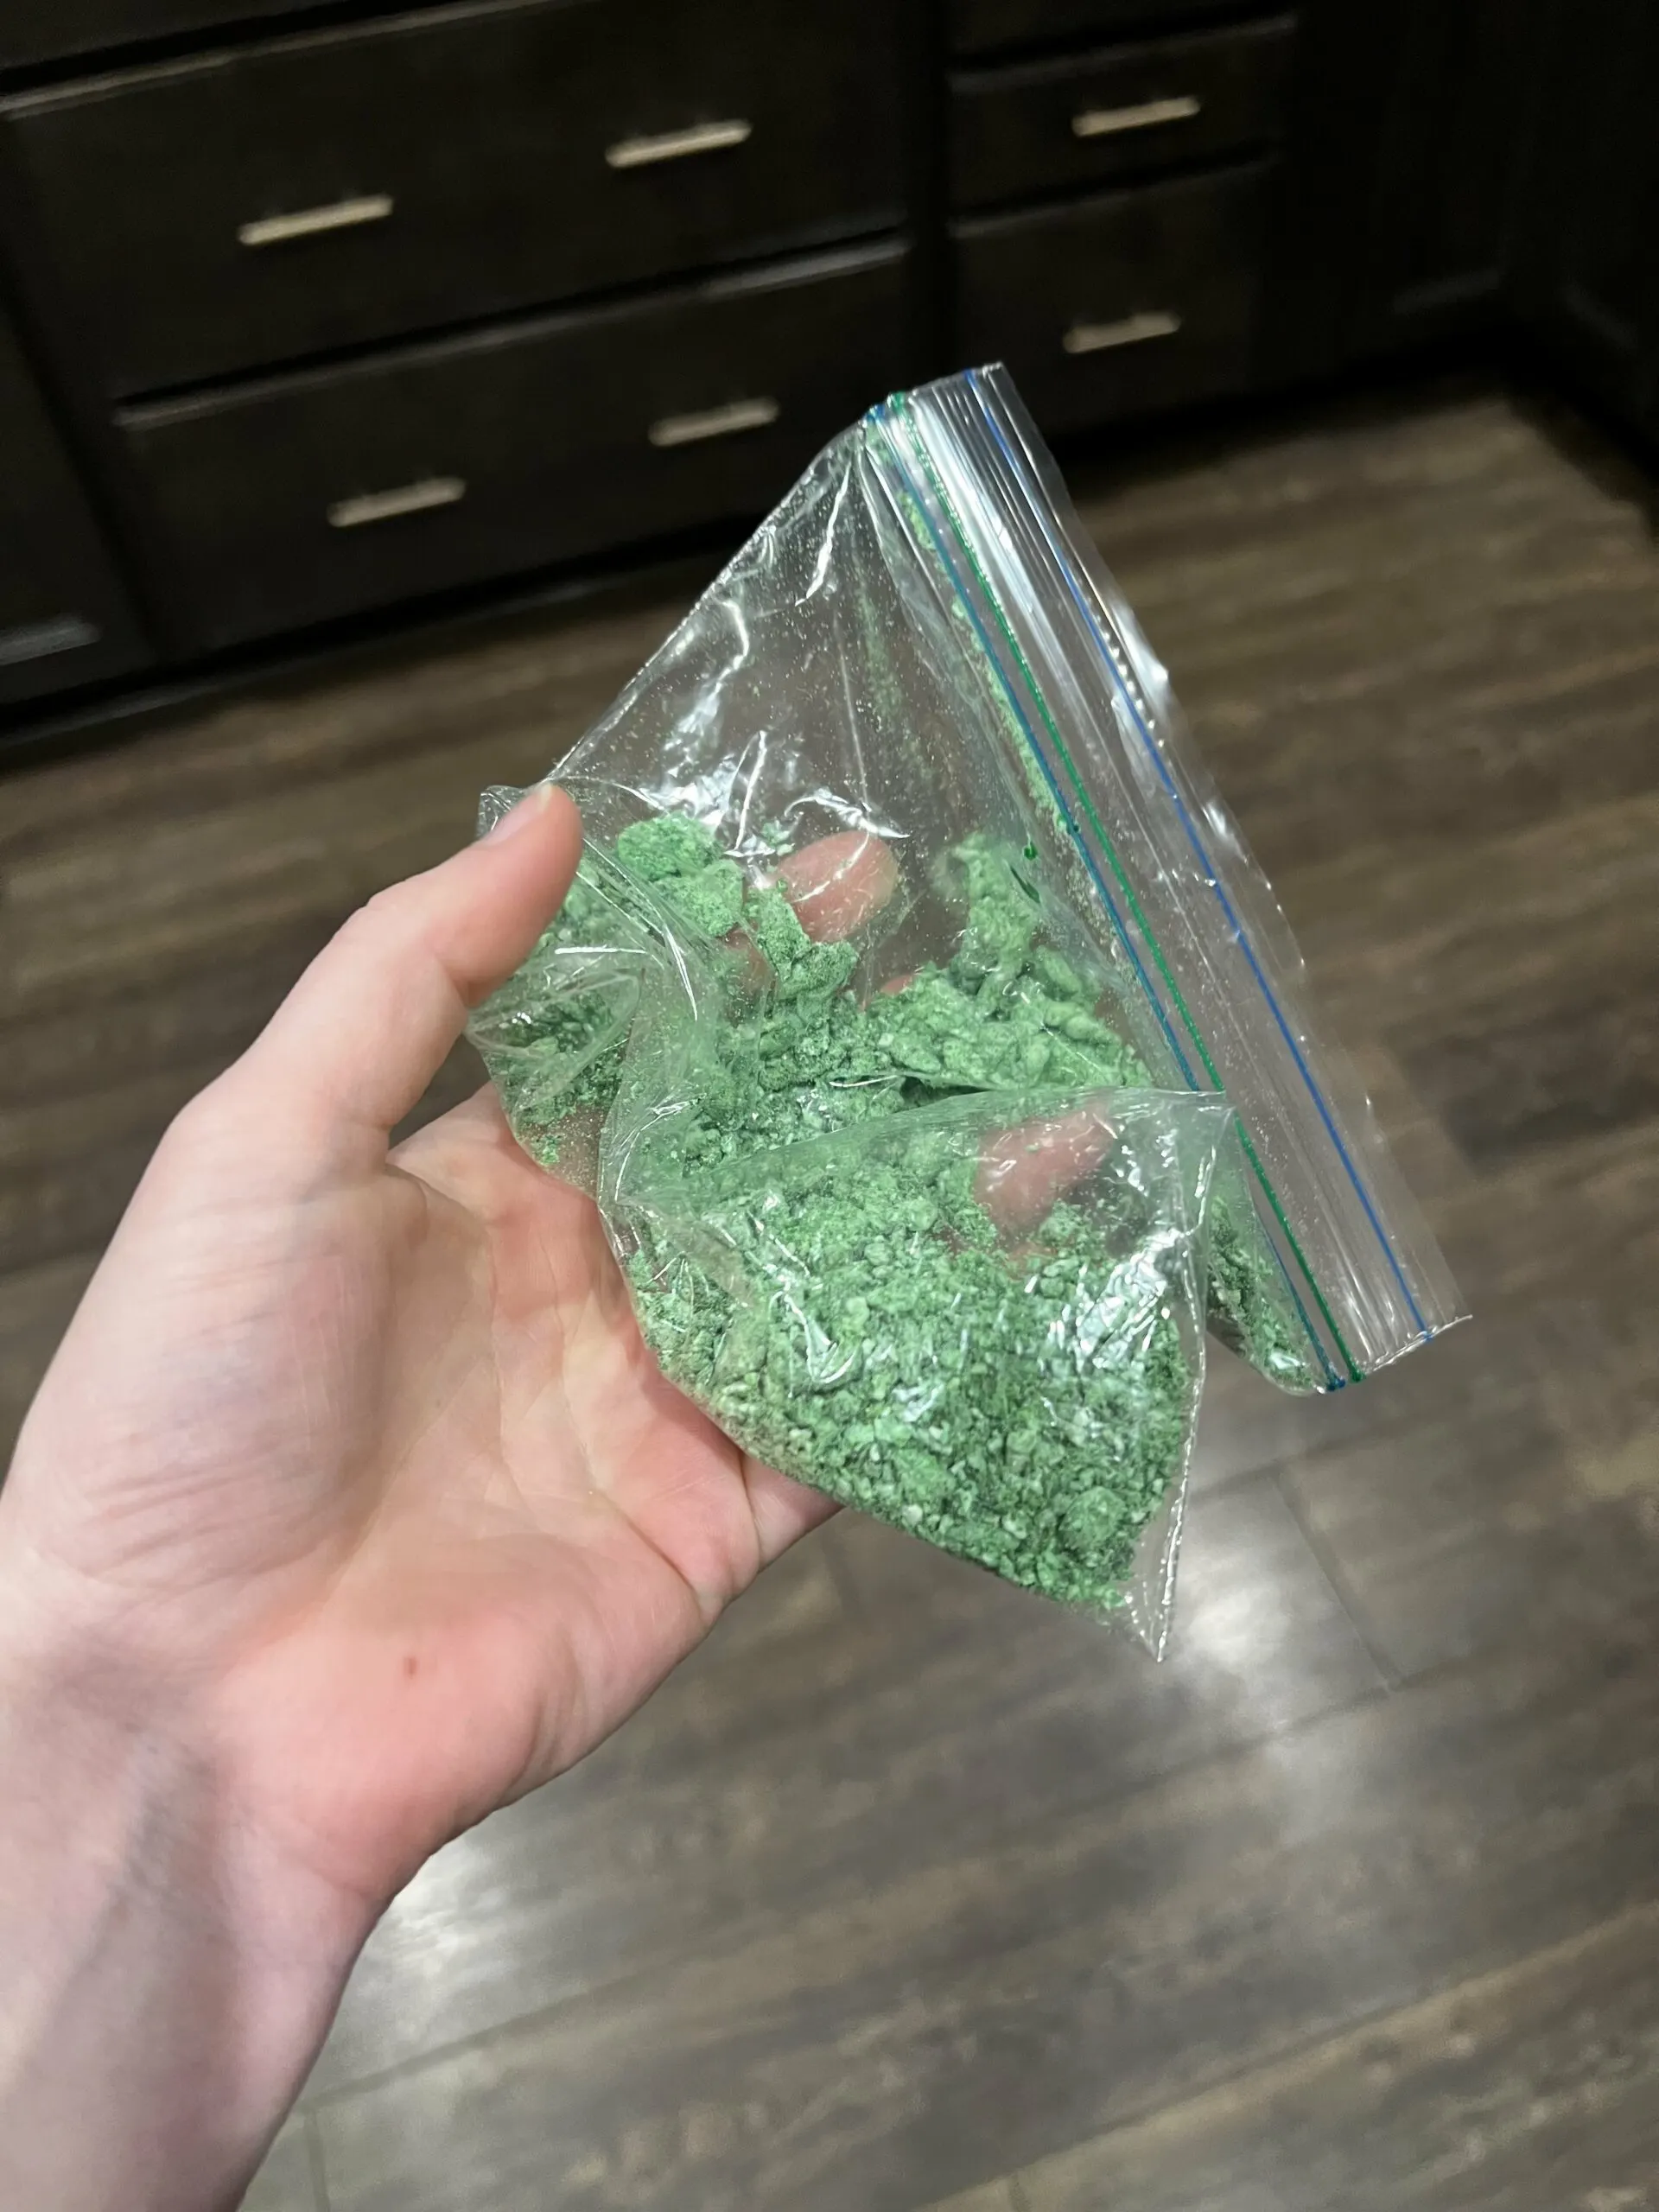 mixing flour in a plastic bag